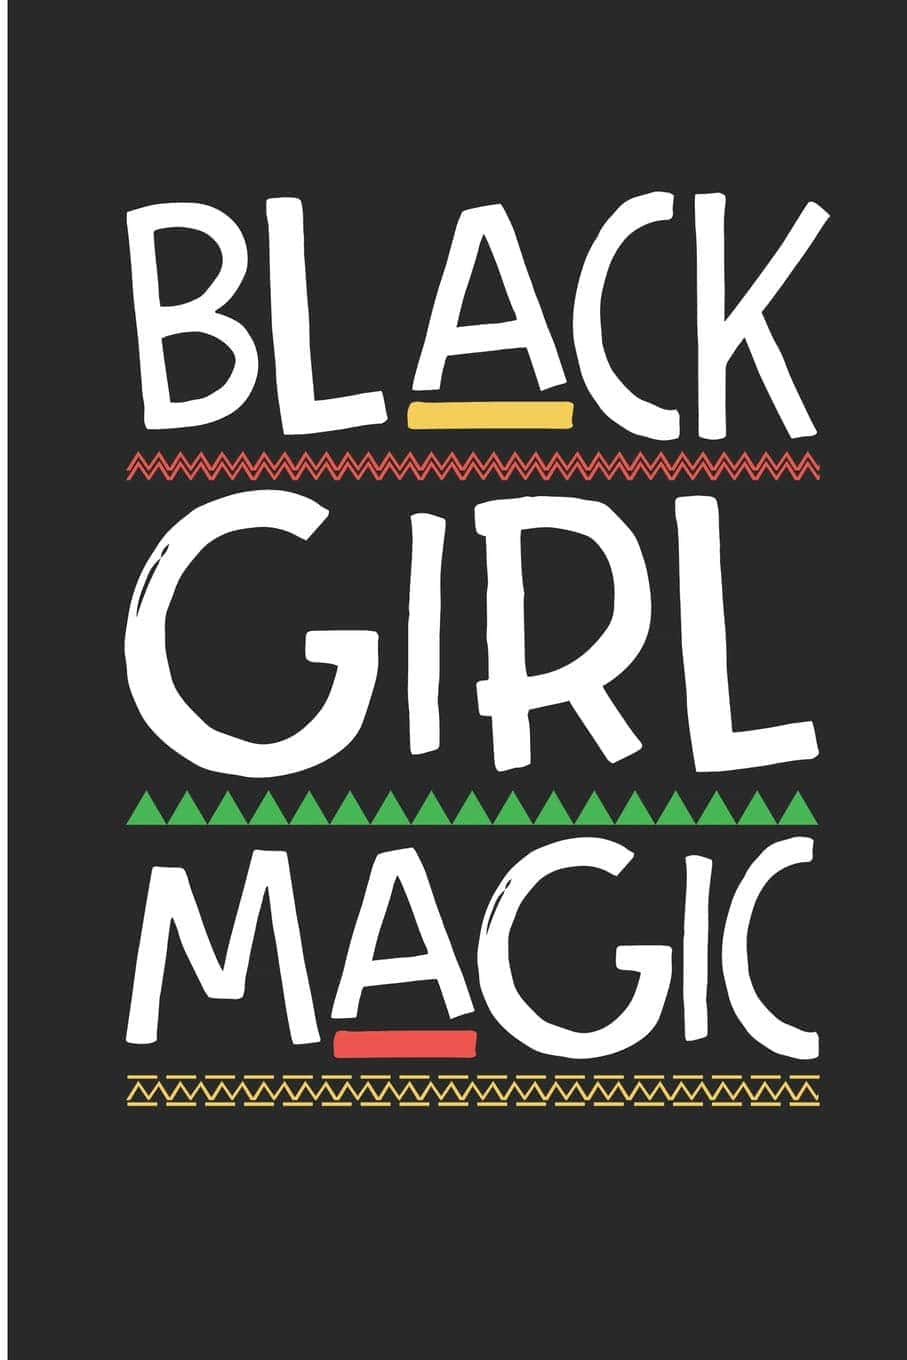 Black Girl Magic Text Image Wallpaper